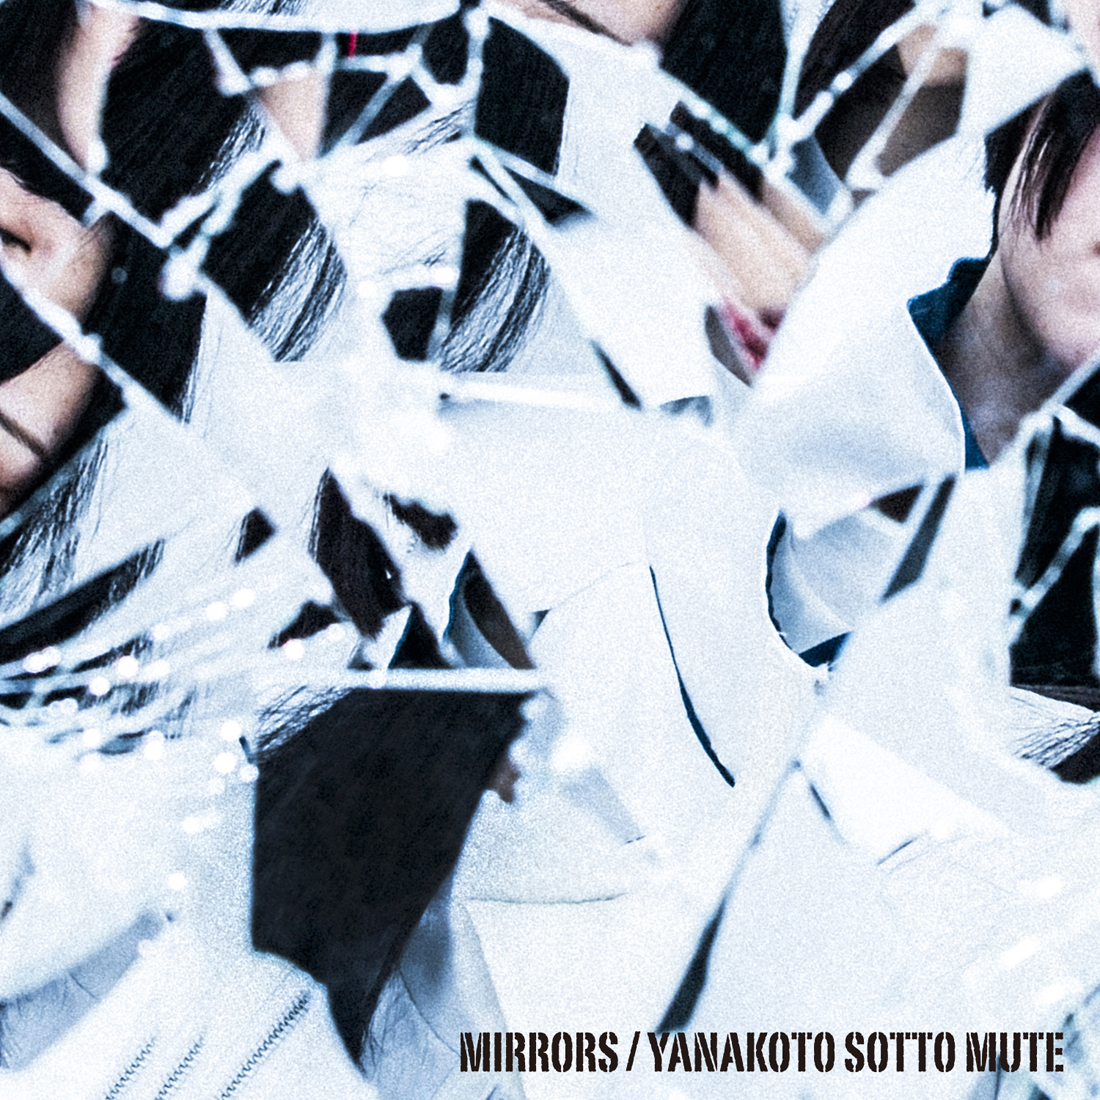 20180703.2356.10 Yanakoto Sotto Mute - Mirrors cover.jpg